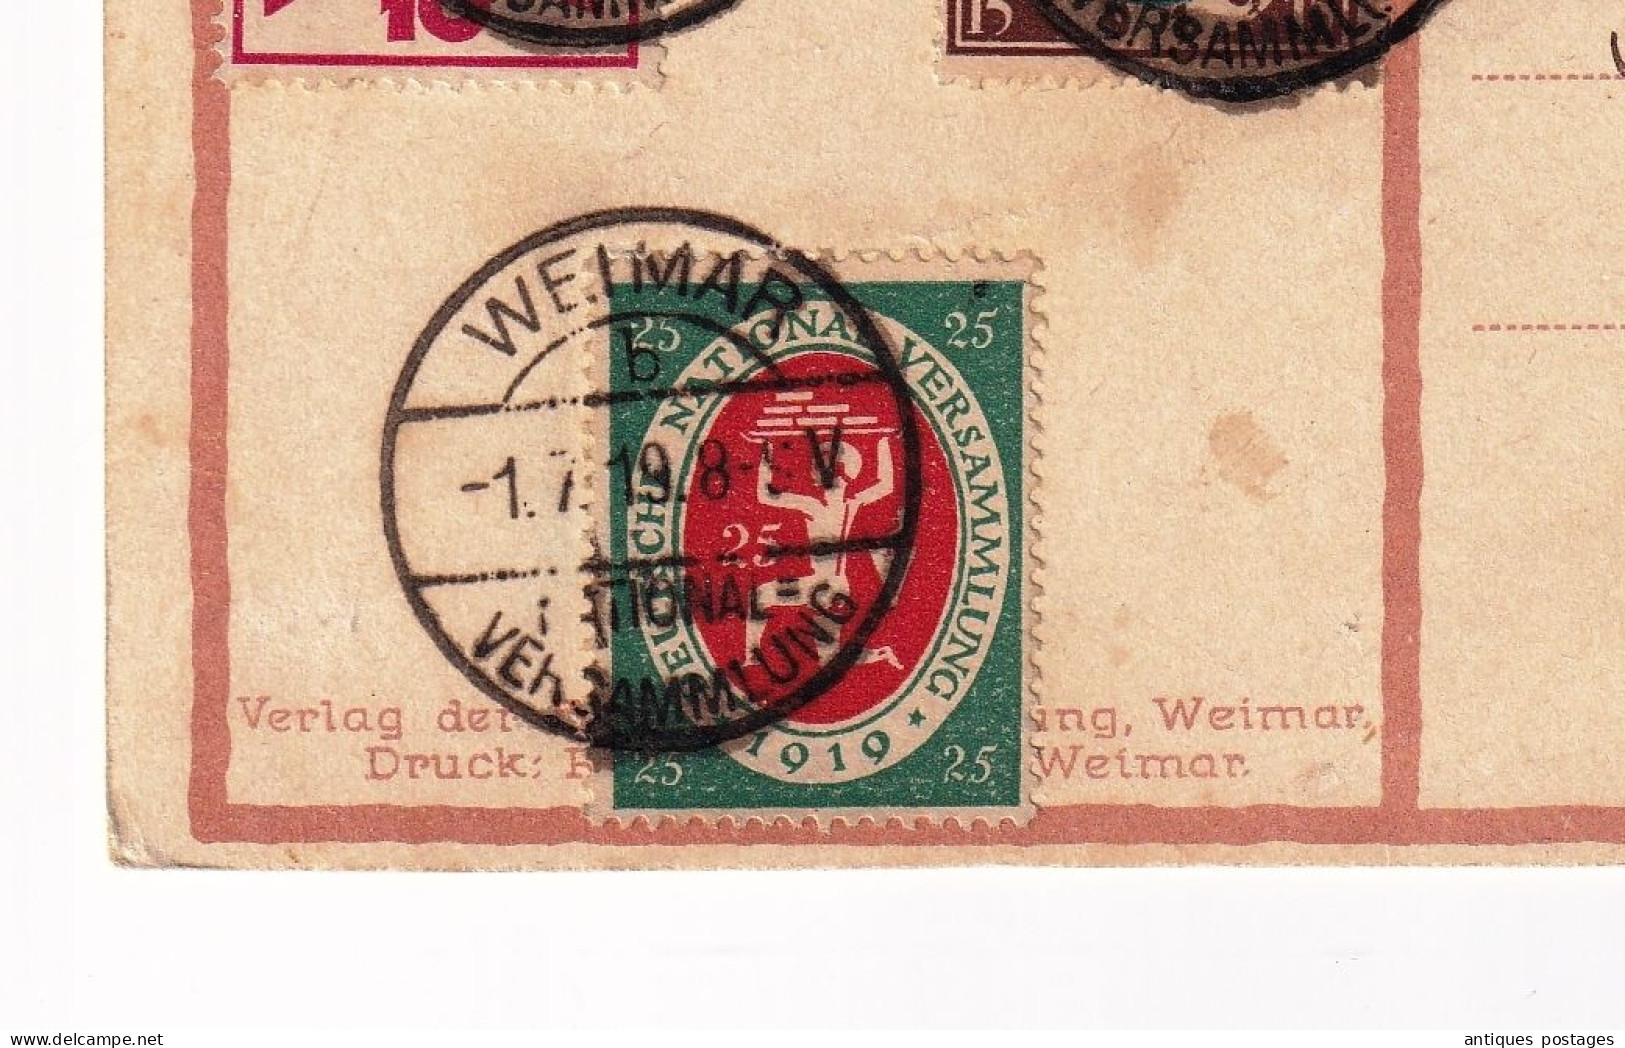 Offizielle Postkarte Weimar 1919 Weimarer Nationalversammlung Deutschland Weimarer Republik République De Weimar - Covers & Documents